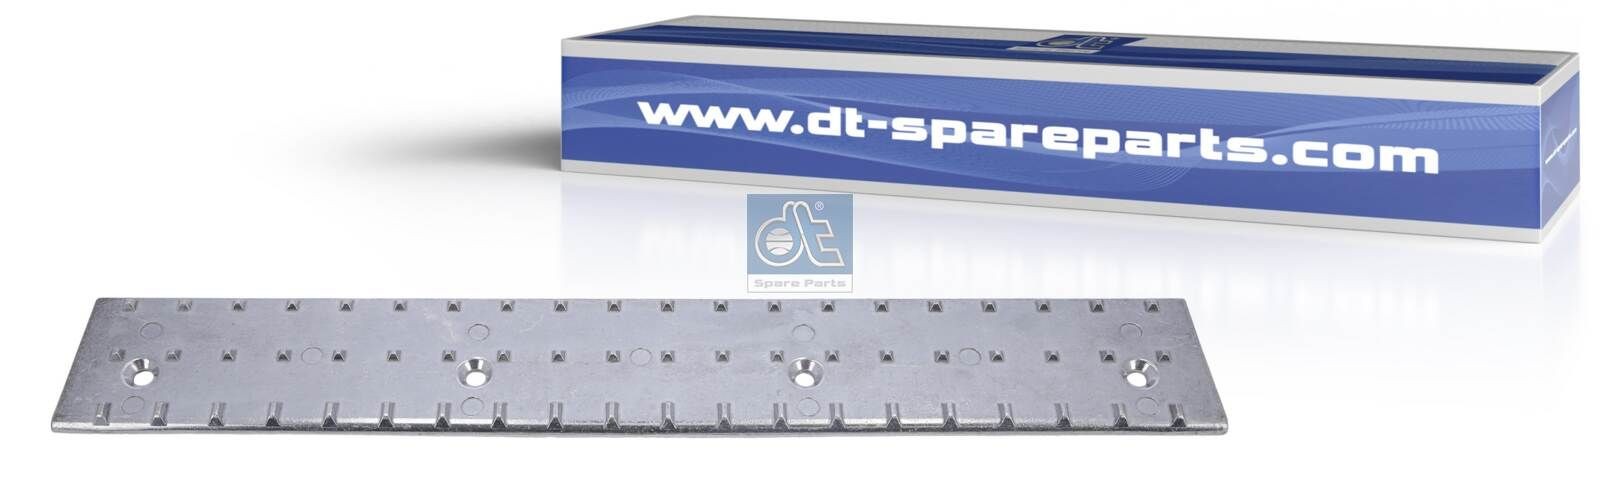 5.16094 DT Spare Parts Trittbrett DAF 85 CF